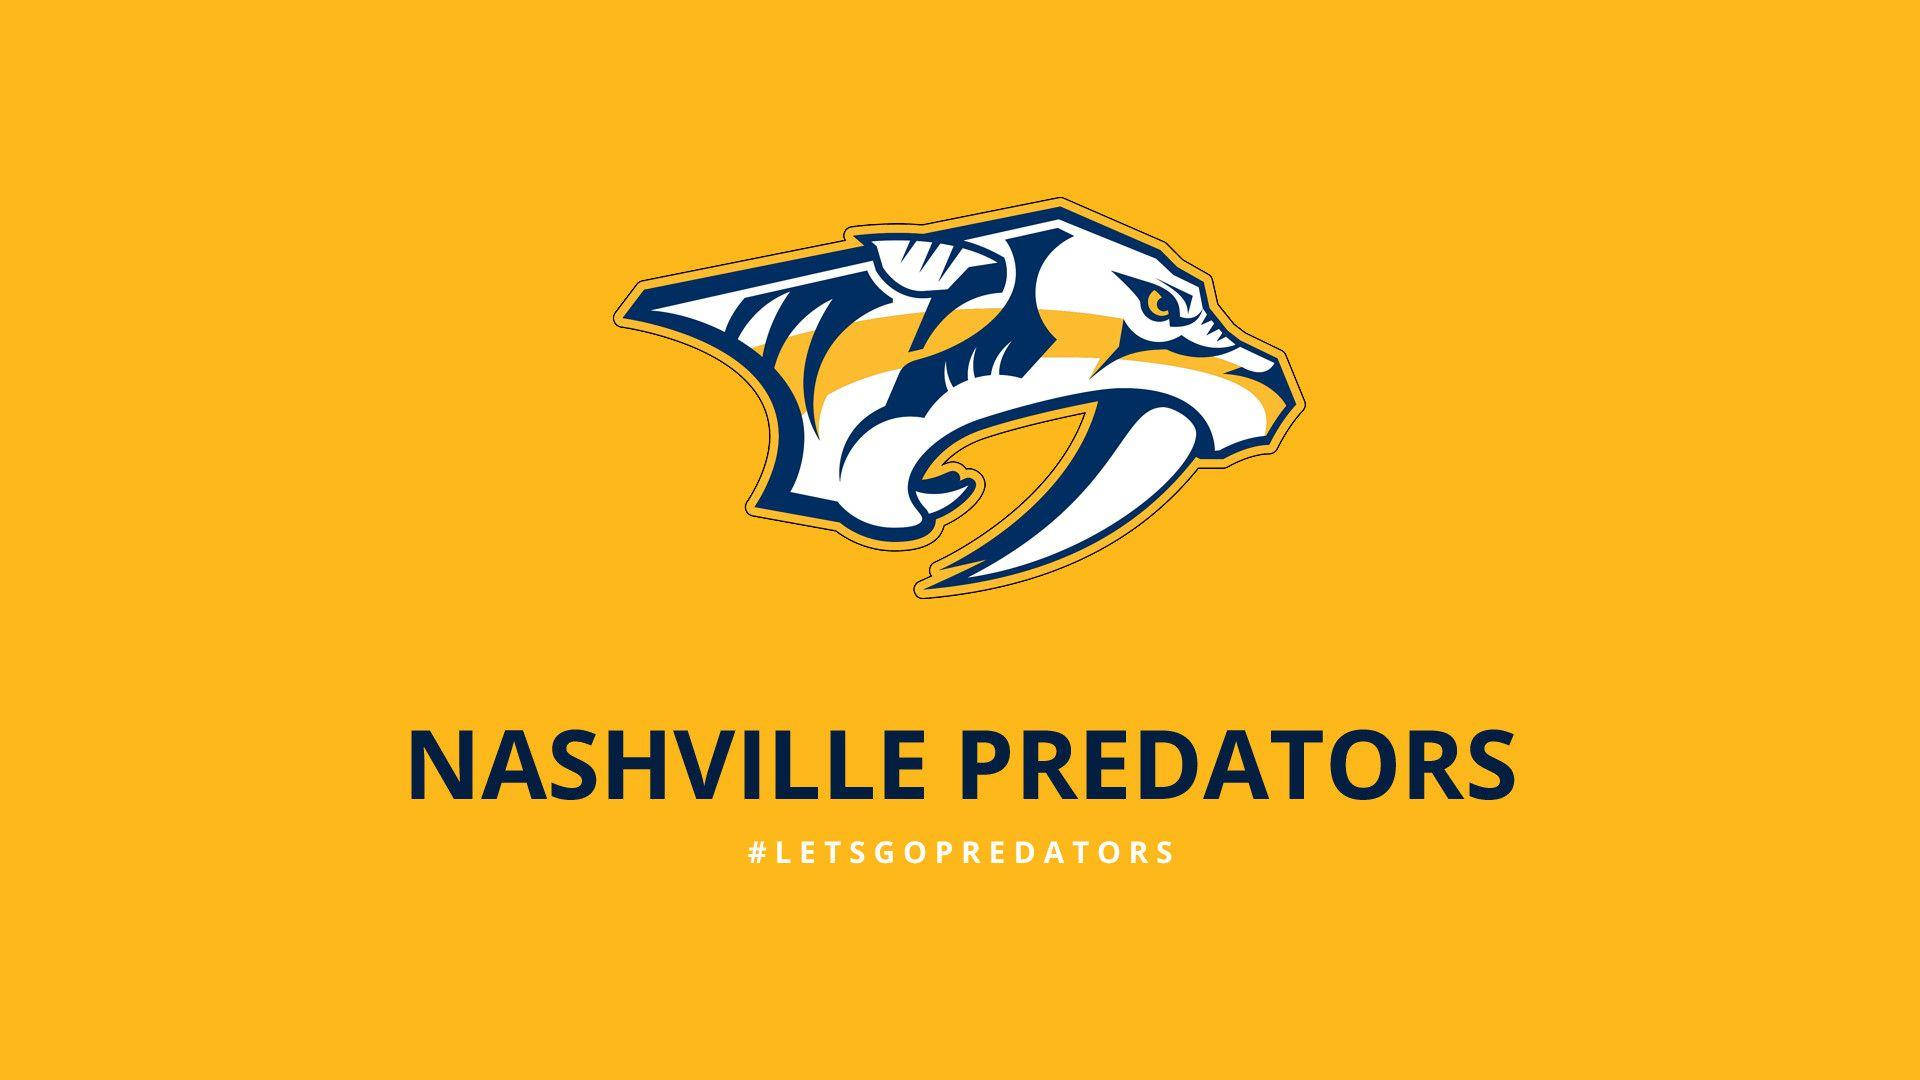 Nashville Predators With Hashtag Let's Go